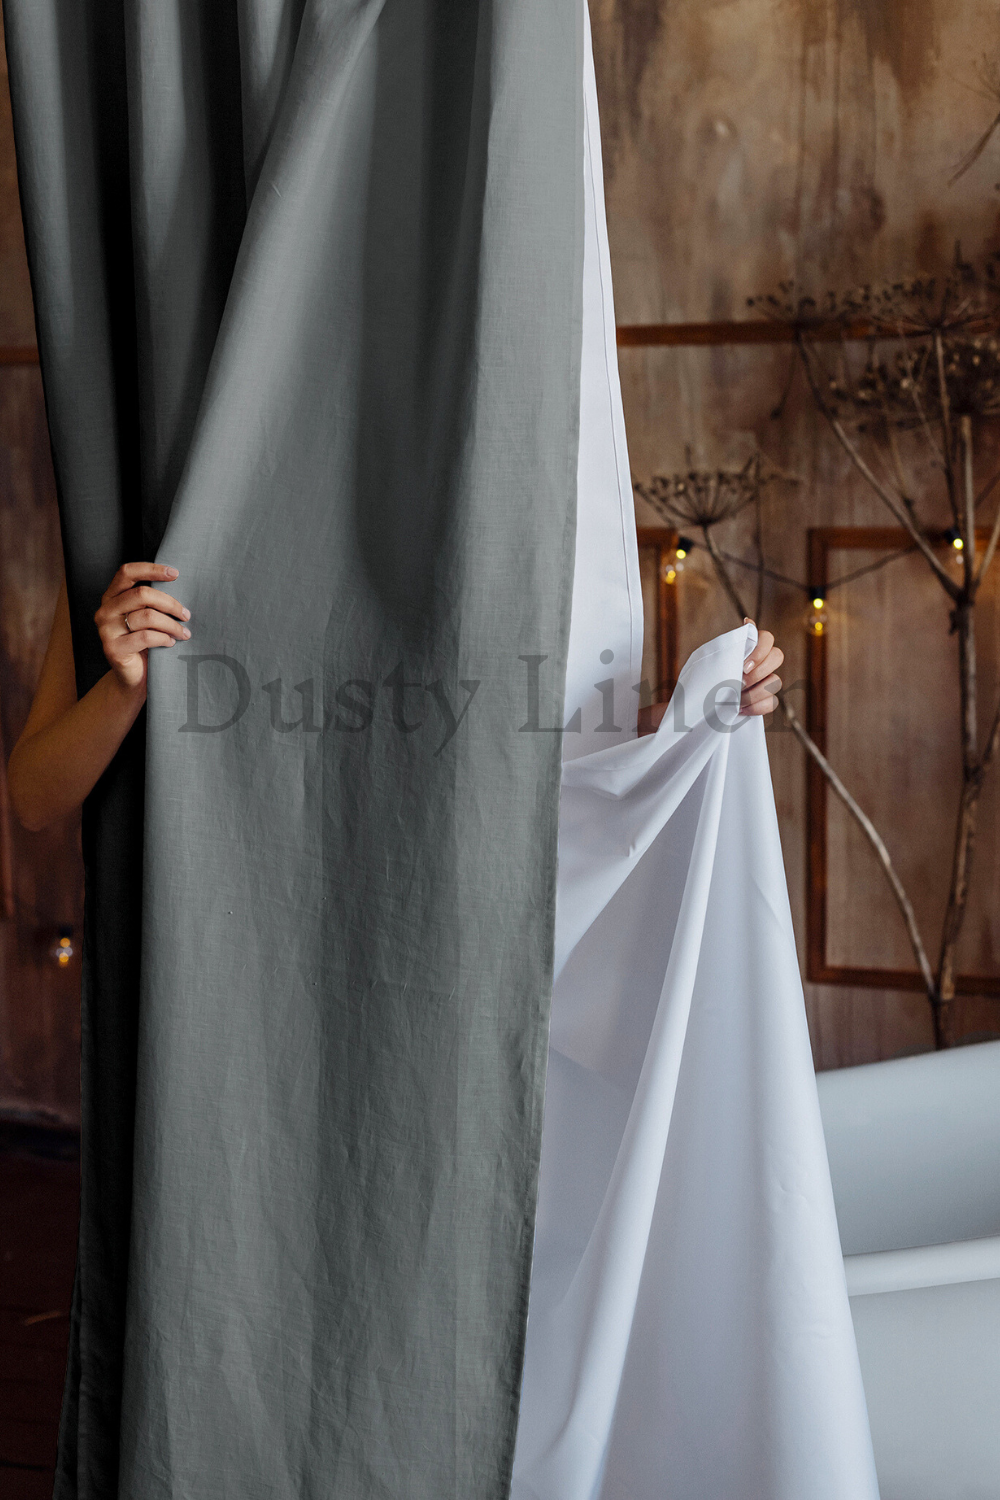 Minimalist style a bathroom with a bathtub and a elegant shower curtain in gray.